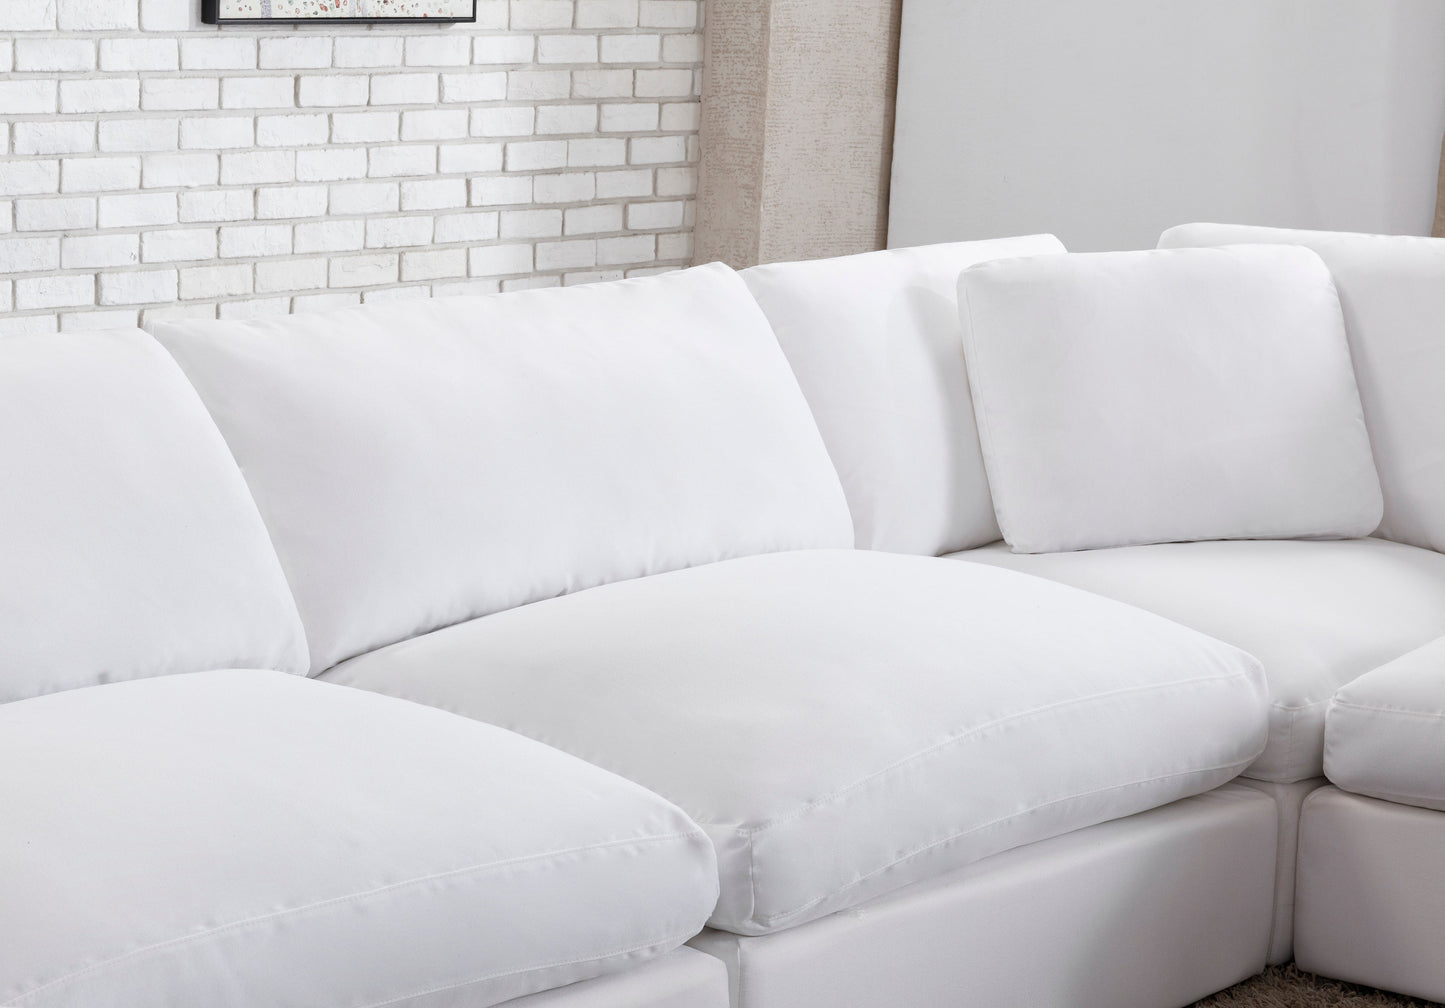 Rivas Contemporary Feather Fill 6-Piece Modular Sectional Sofa with Ottoman, White